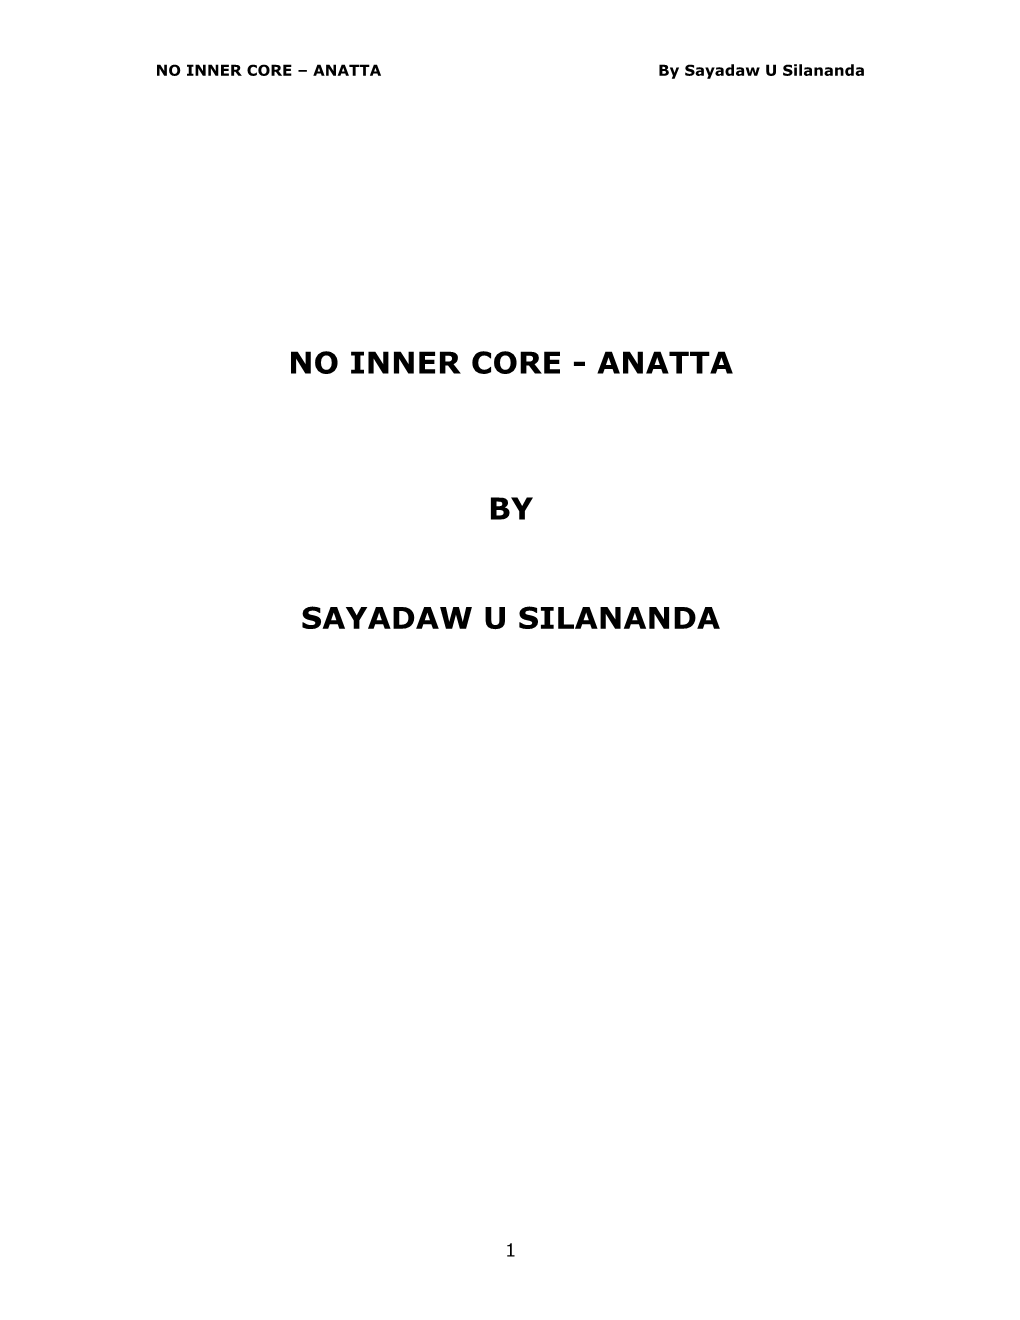 NO INNER CORE – ANATTA by Sayadaw U Silananda